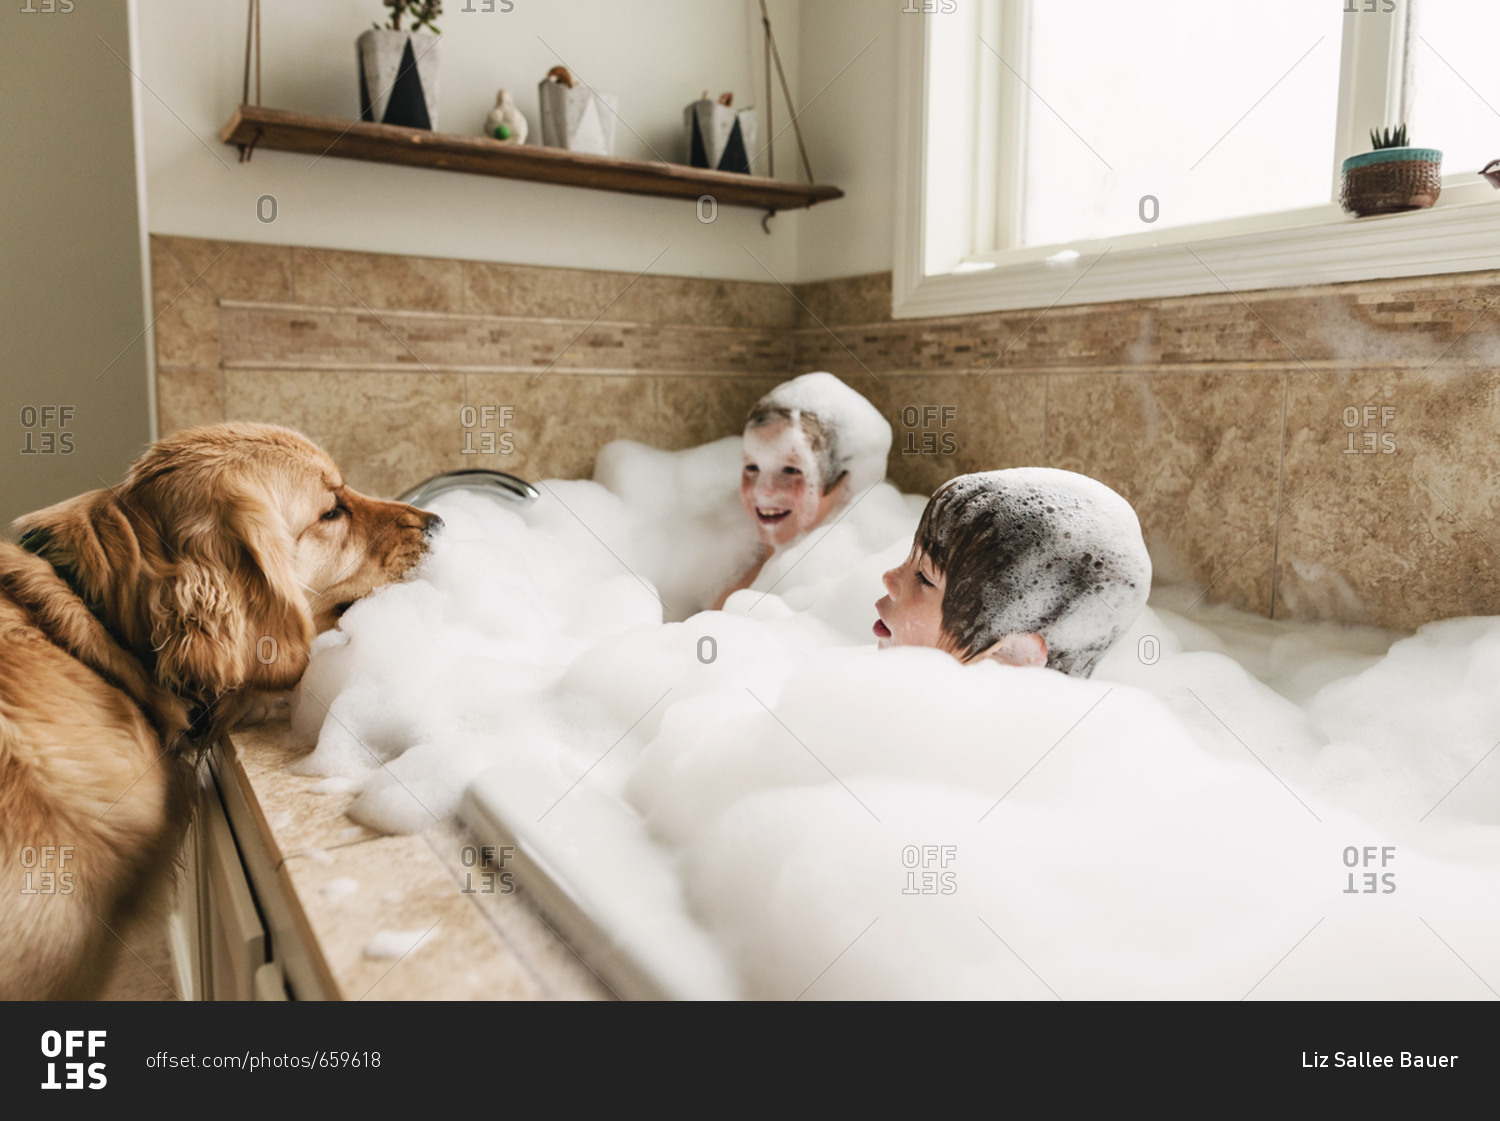 Dog sitting by bathtub while kids play in a bubble bath